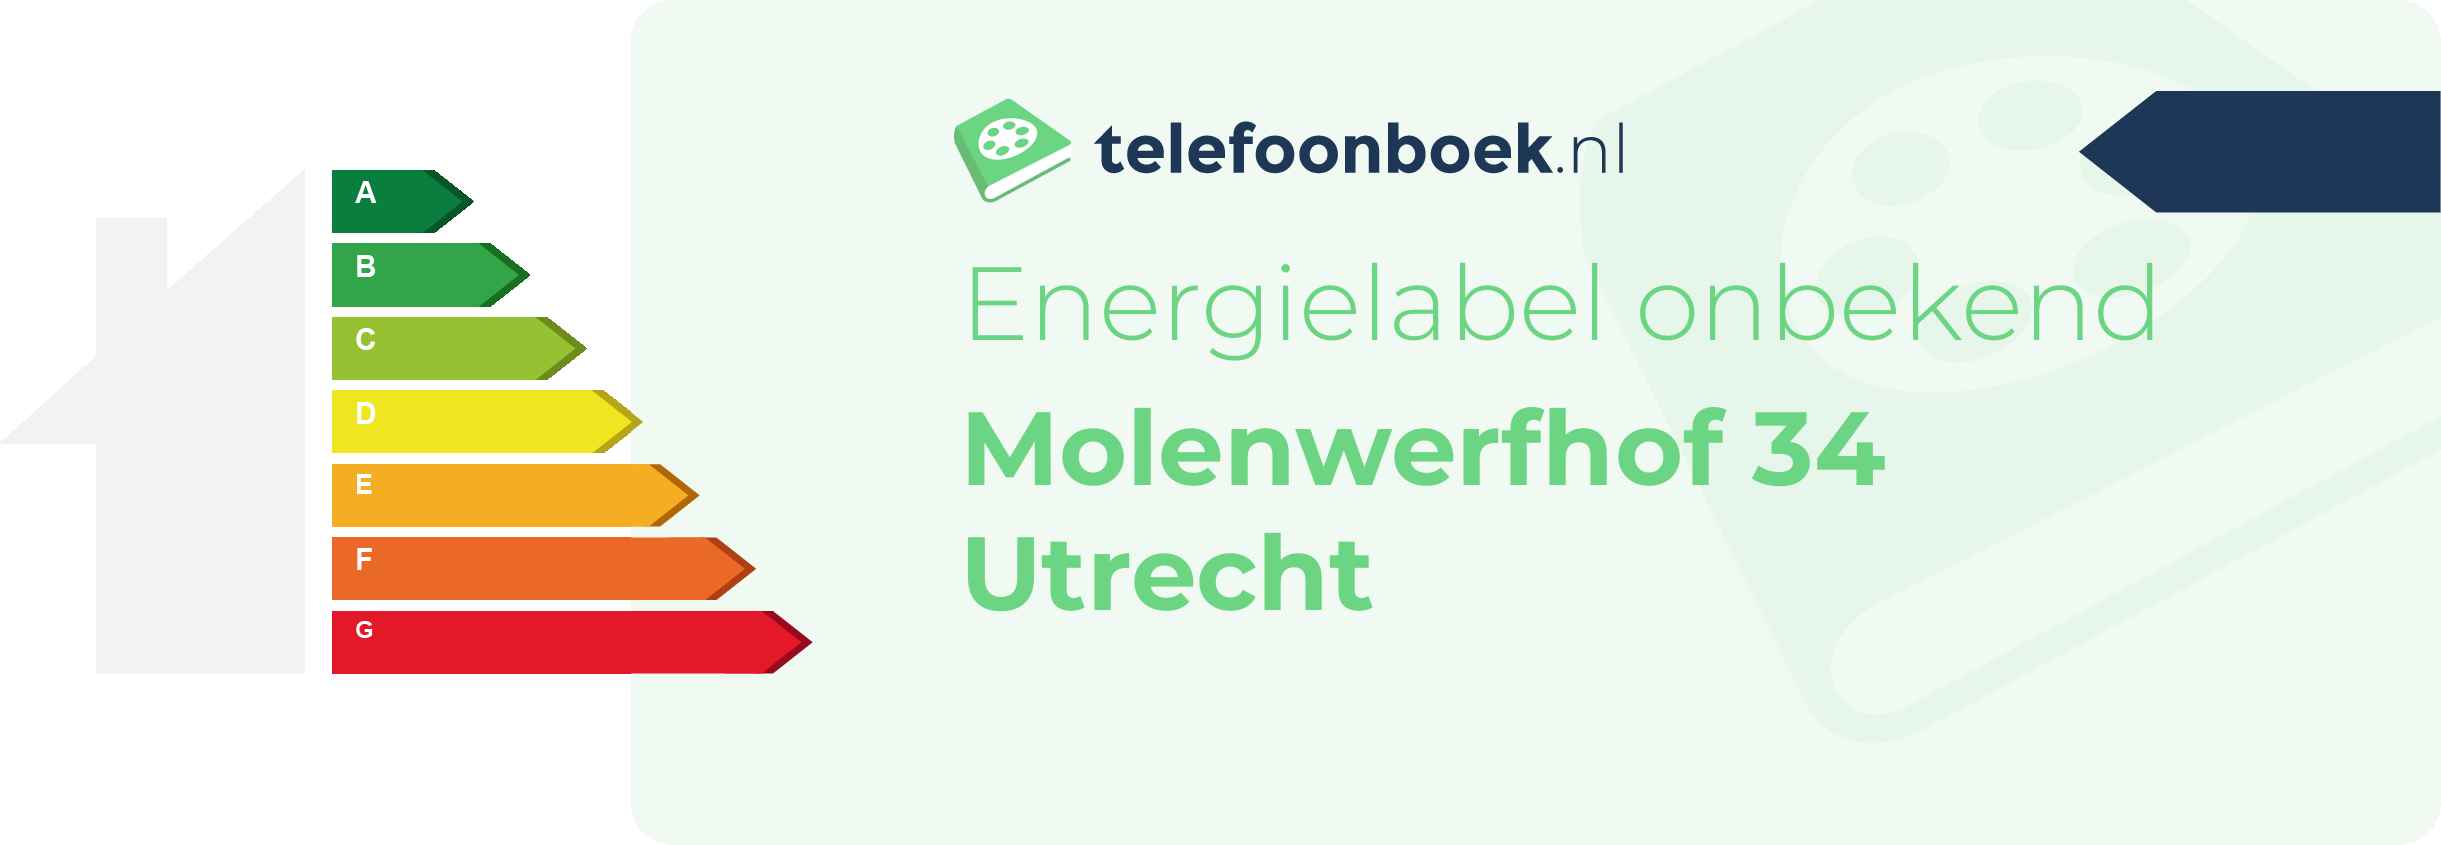 Energielabel Molenwerfhof 34 Utrecht